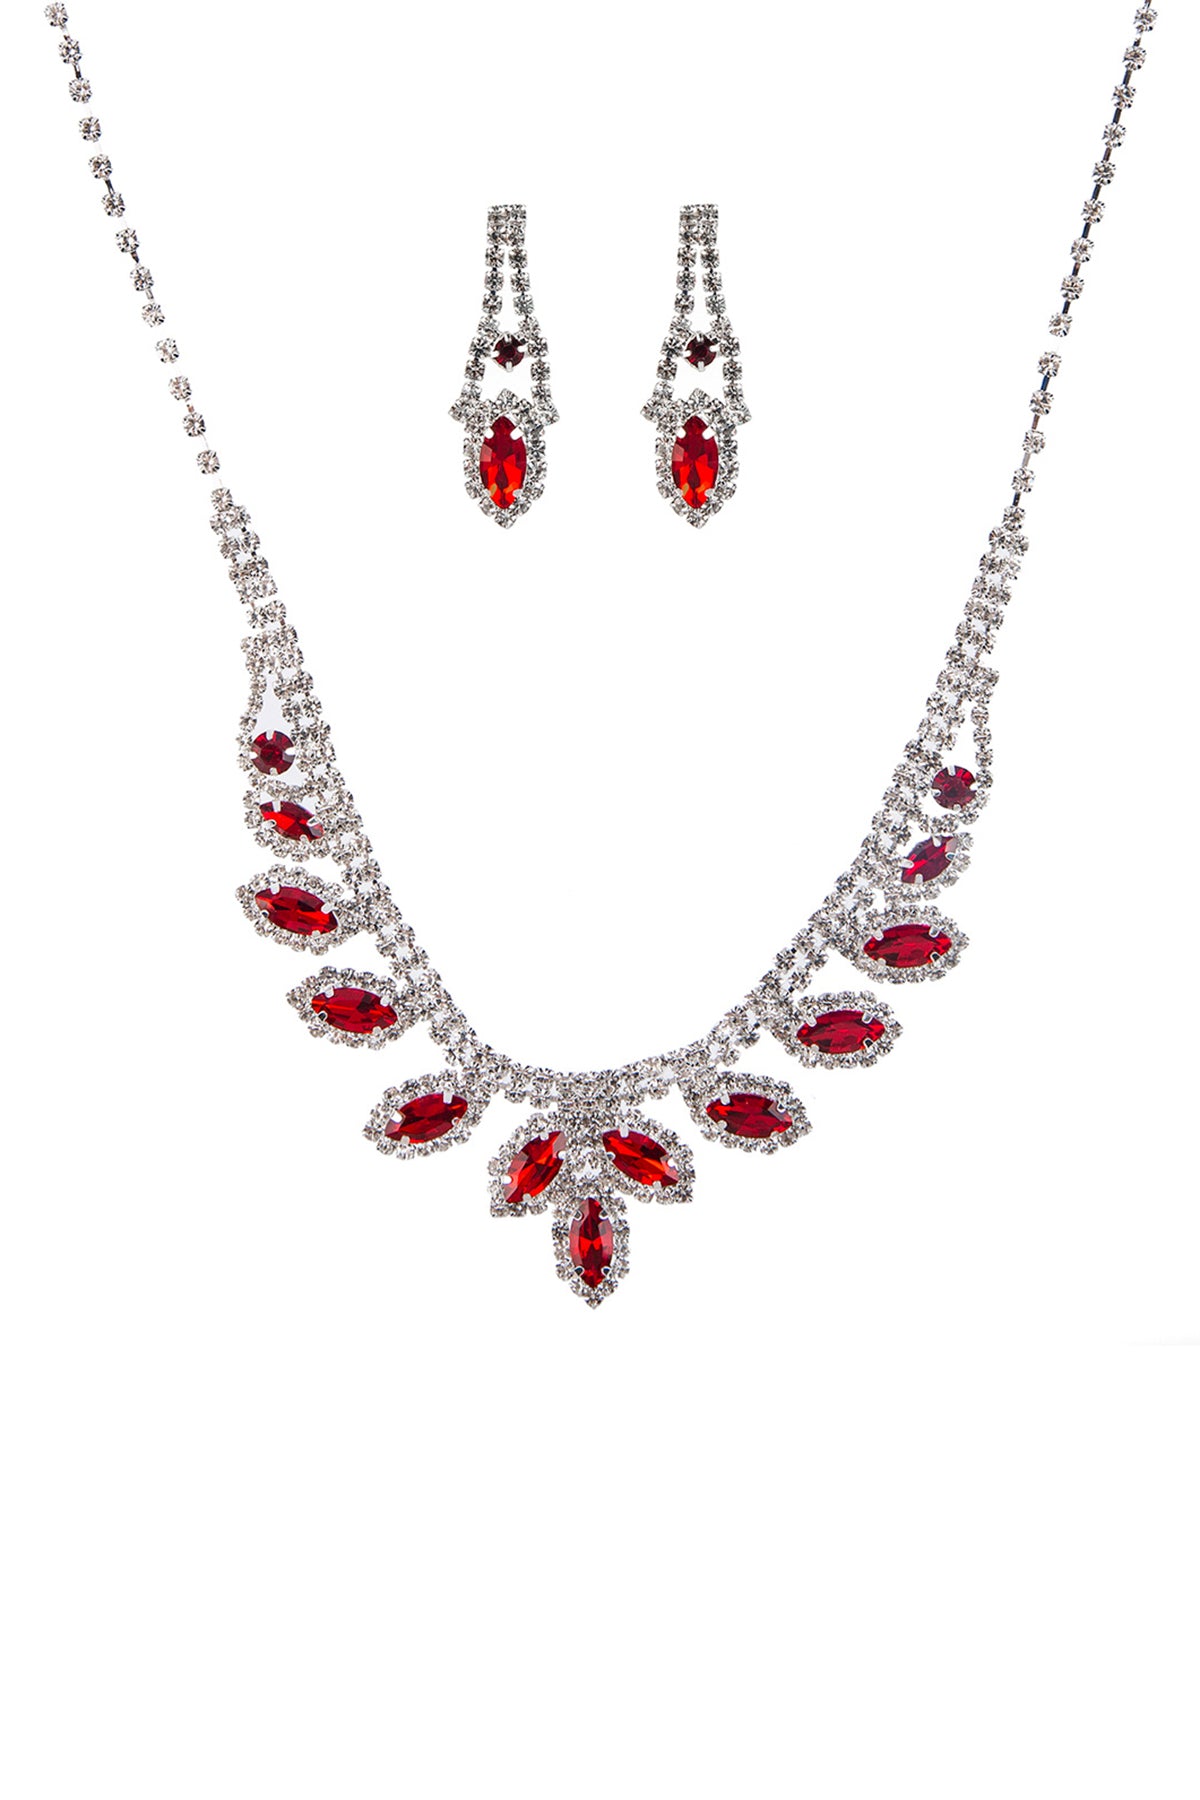 Rhinestone Marquise Wedding Necklace And Earring Set - Tigbuls Variety Fashion